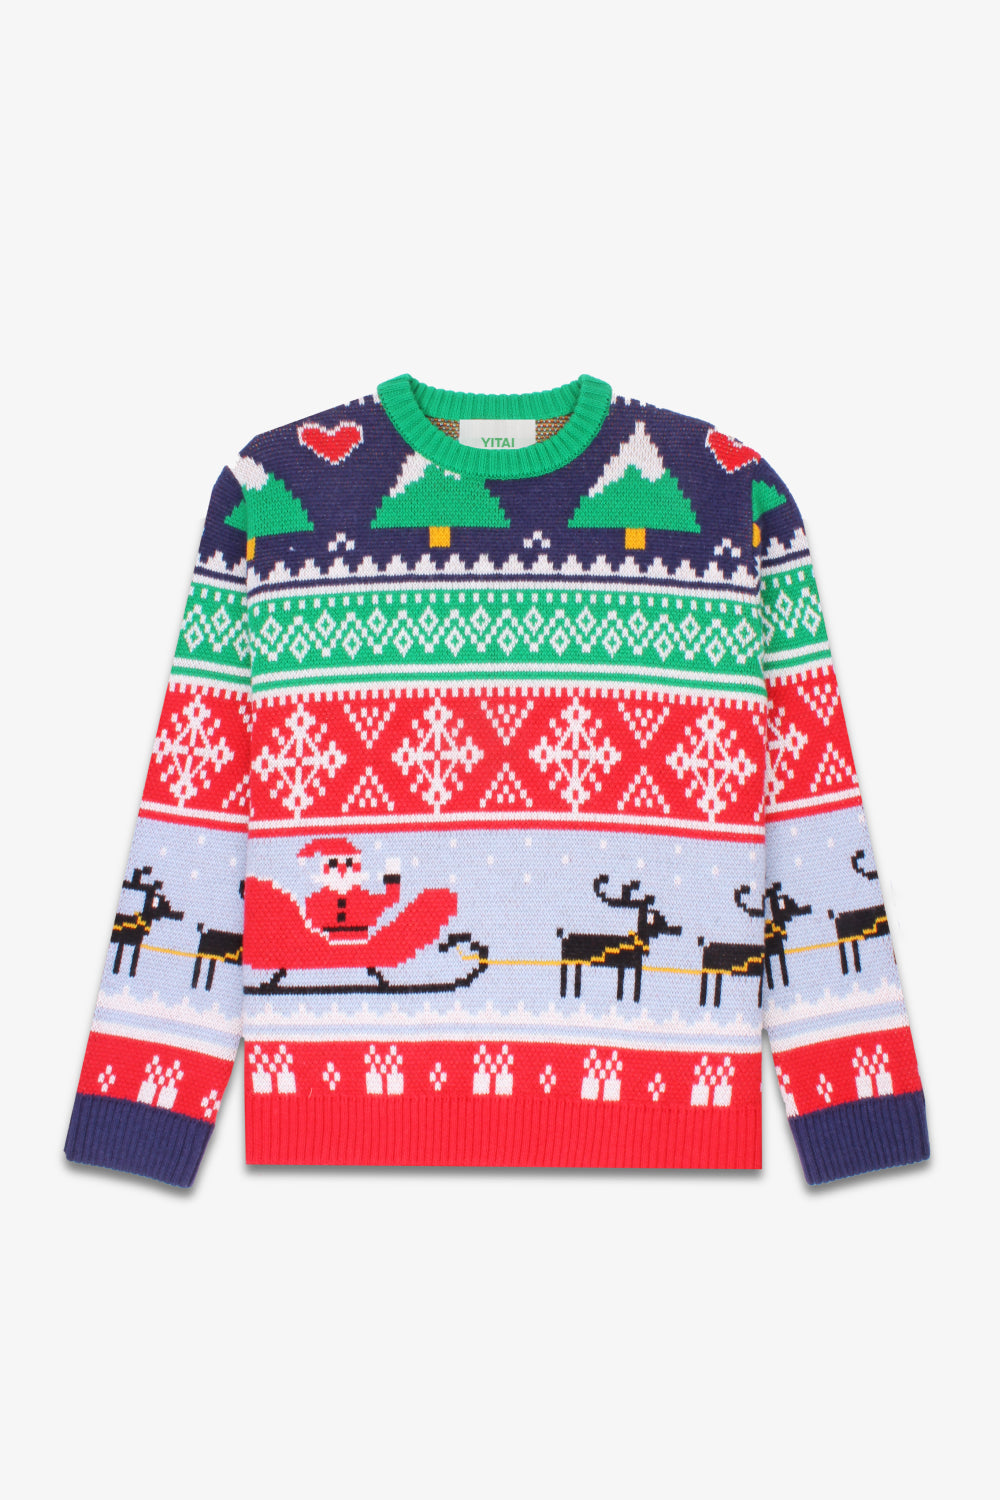 Christmas "Ugly" Sweater